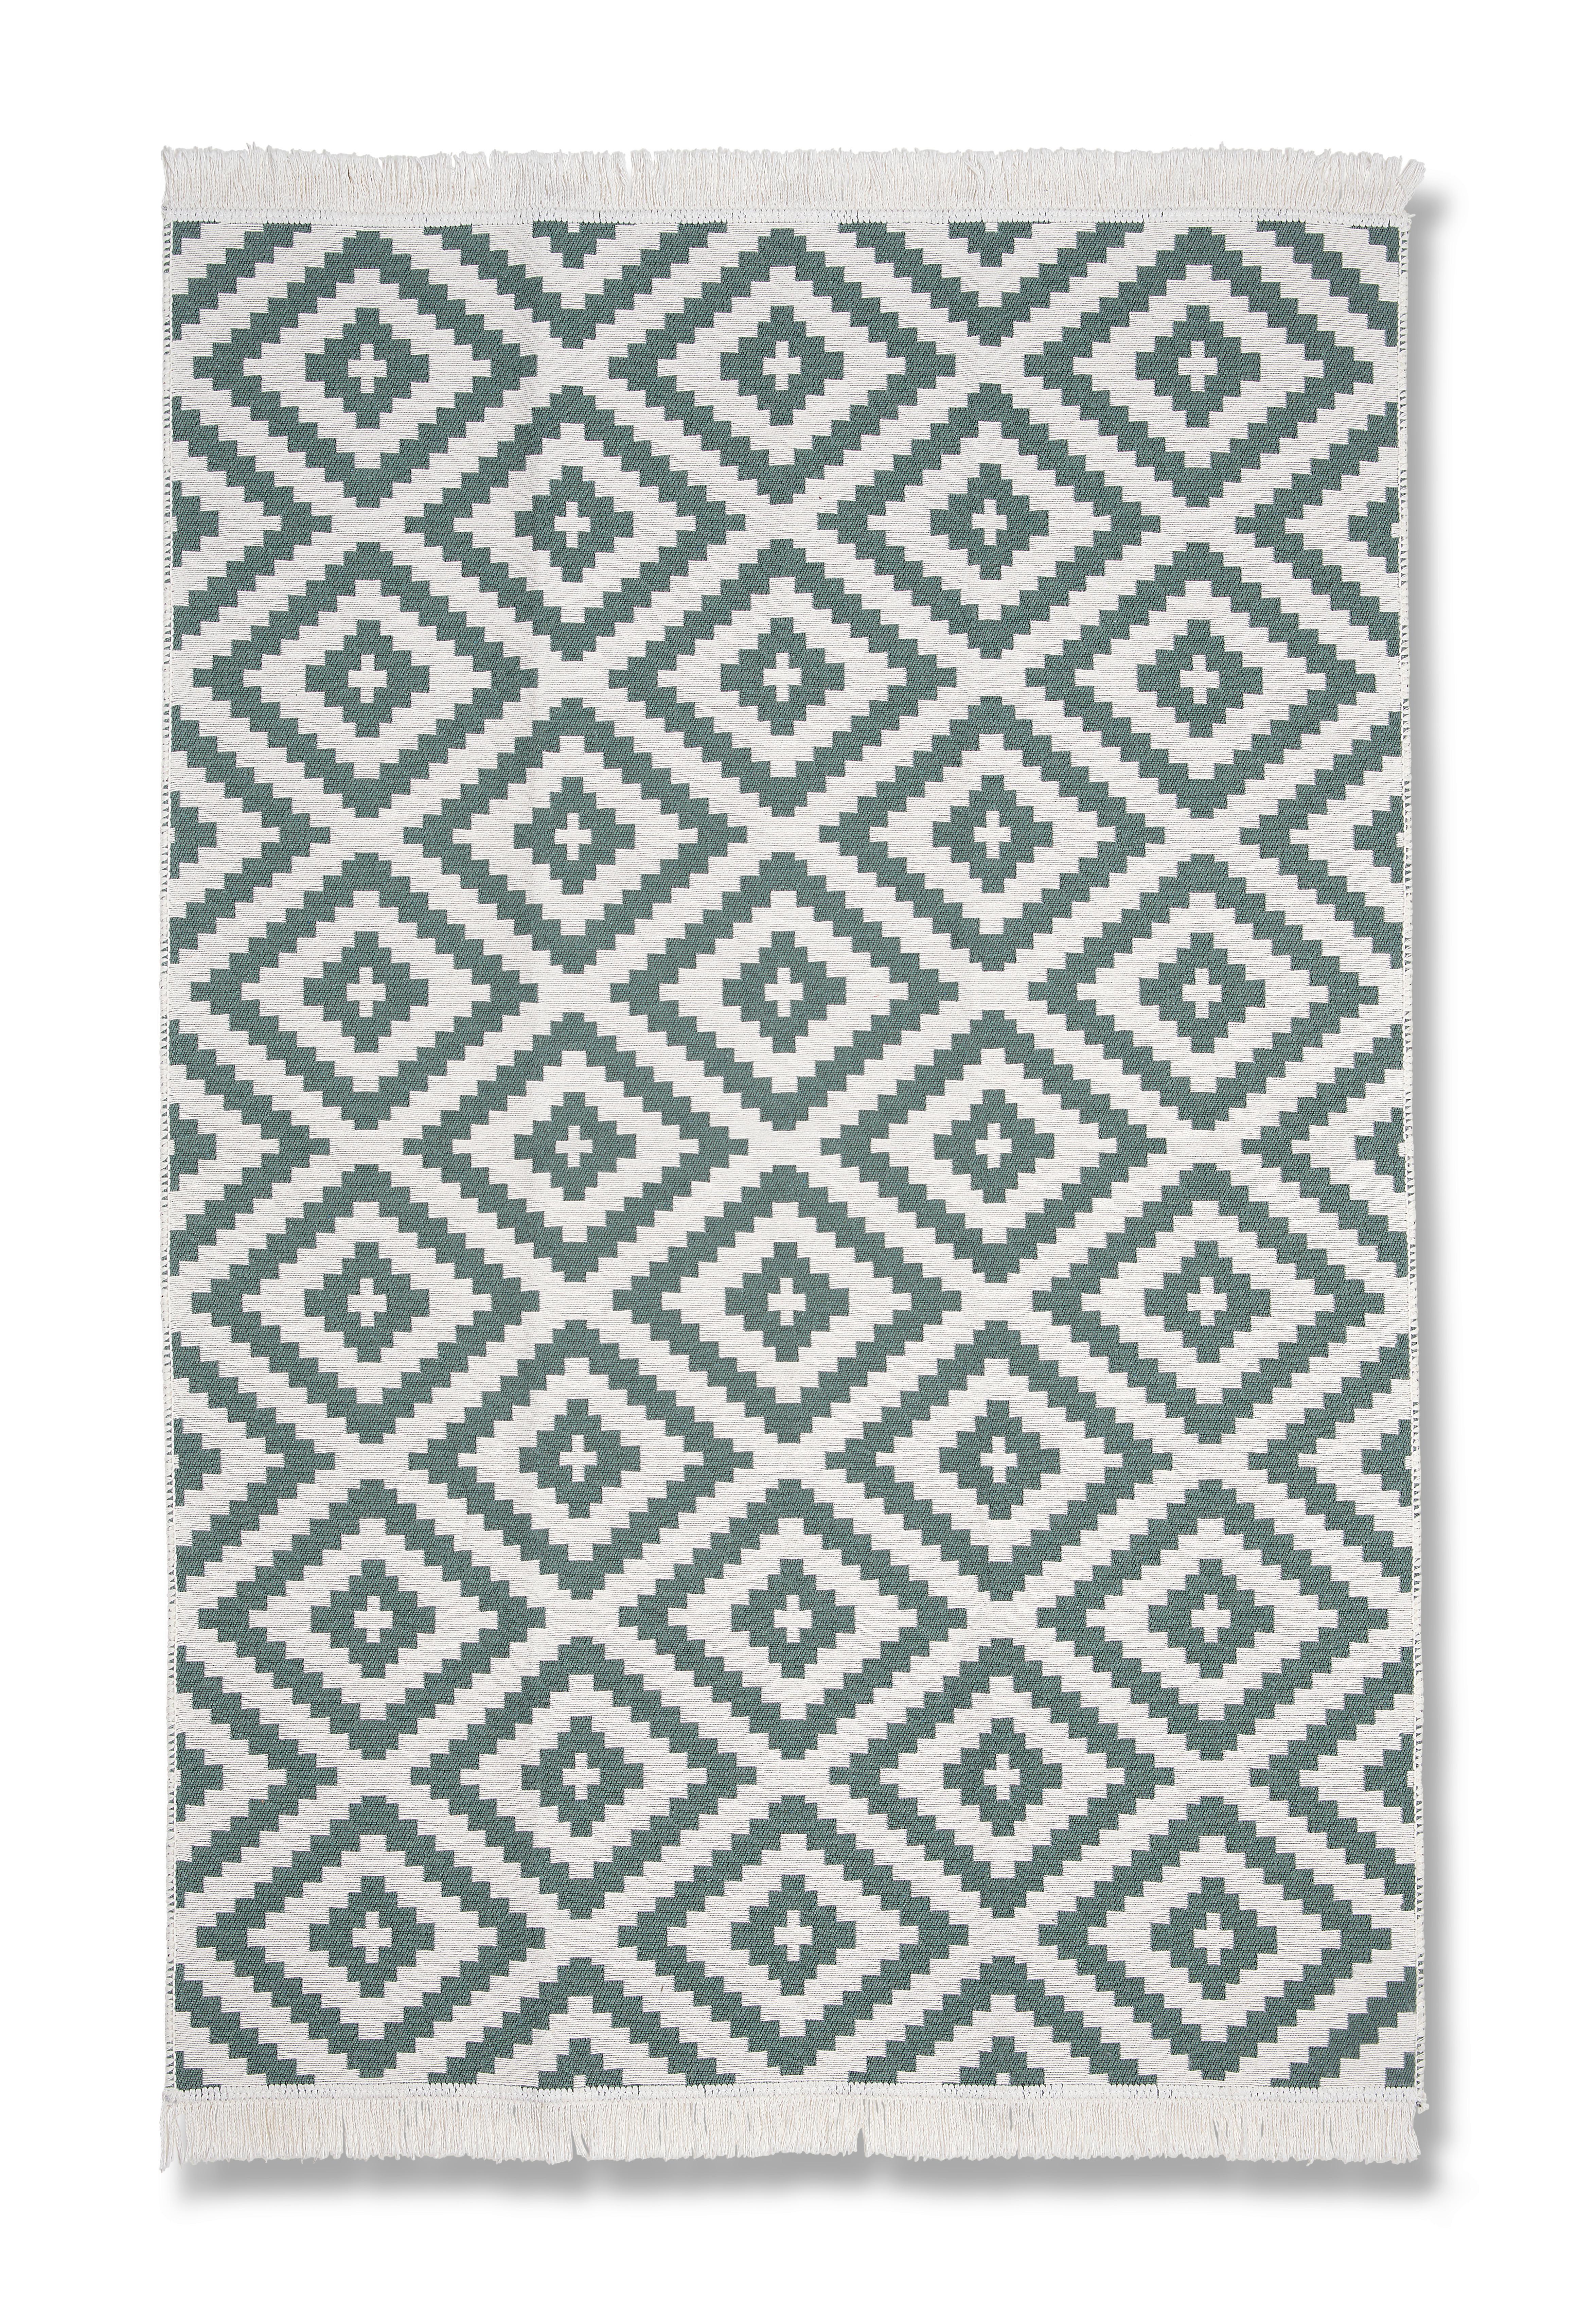 Ročno Tkana Preproga Inaya 1 - zelena/bela, Moderno, tekstil (80/150cm) - Modern Living